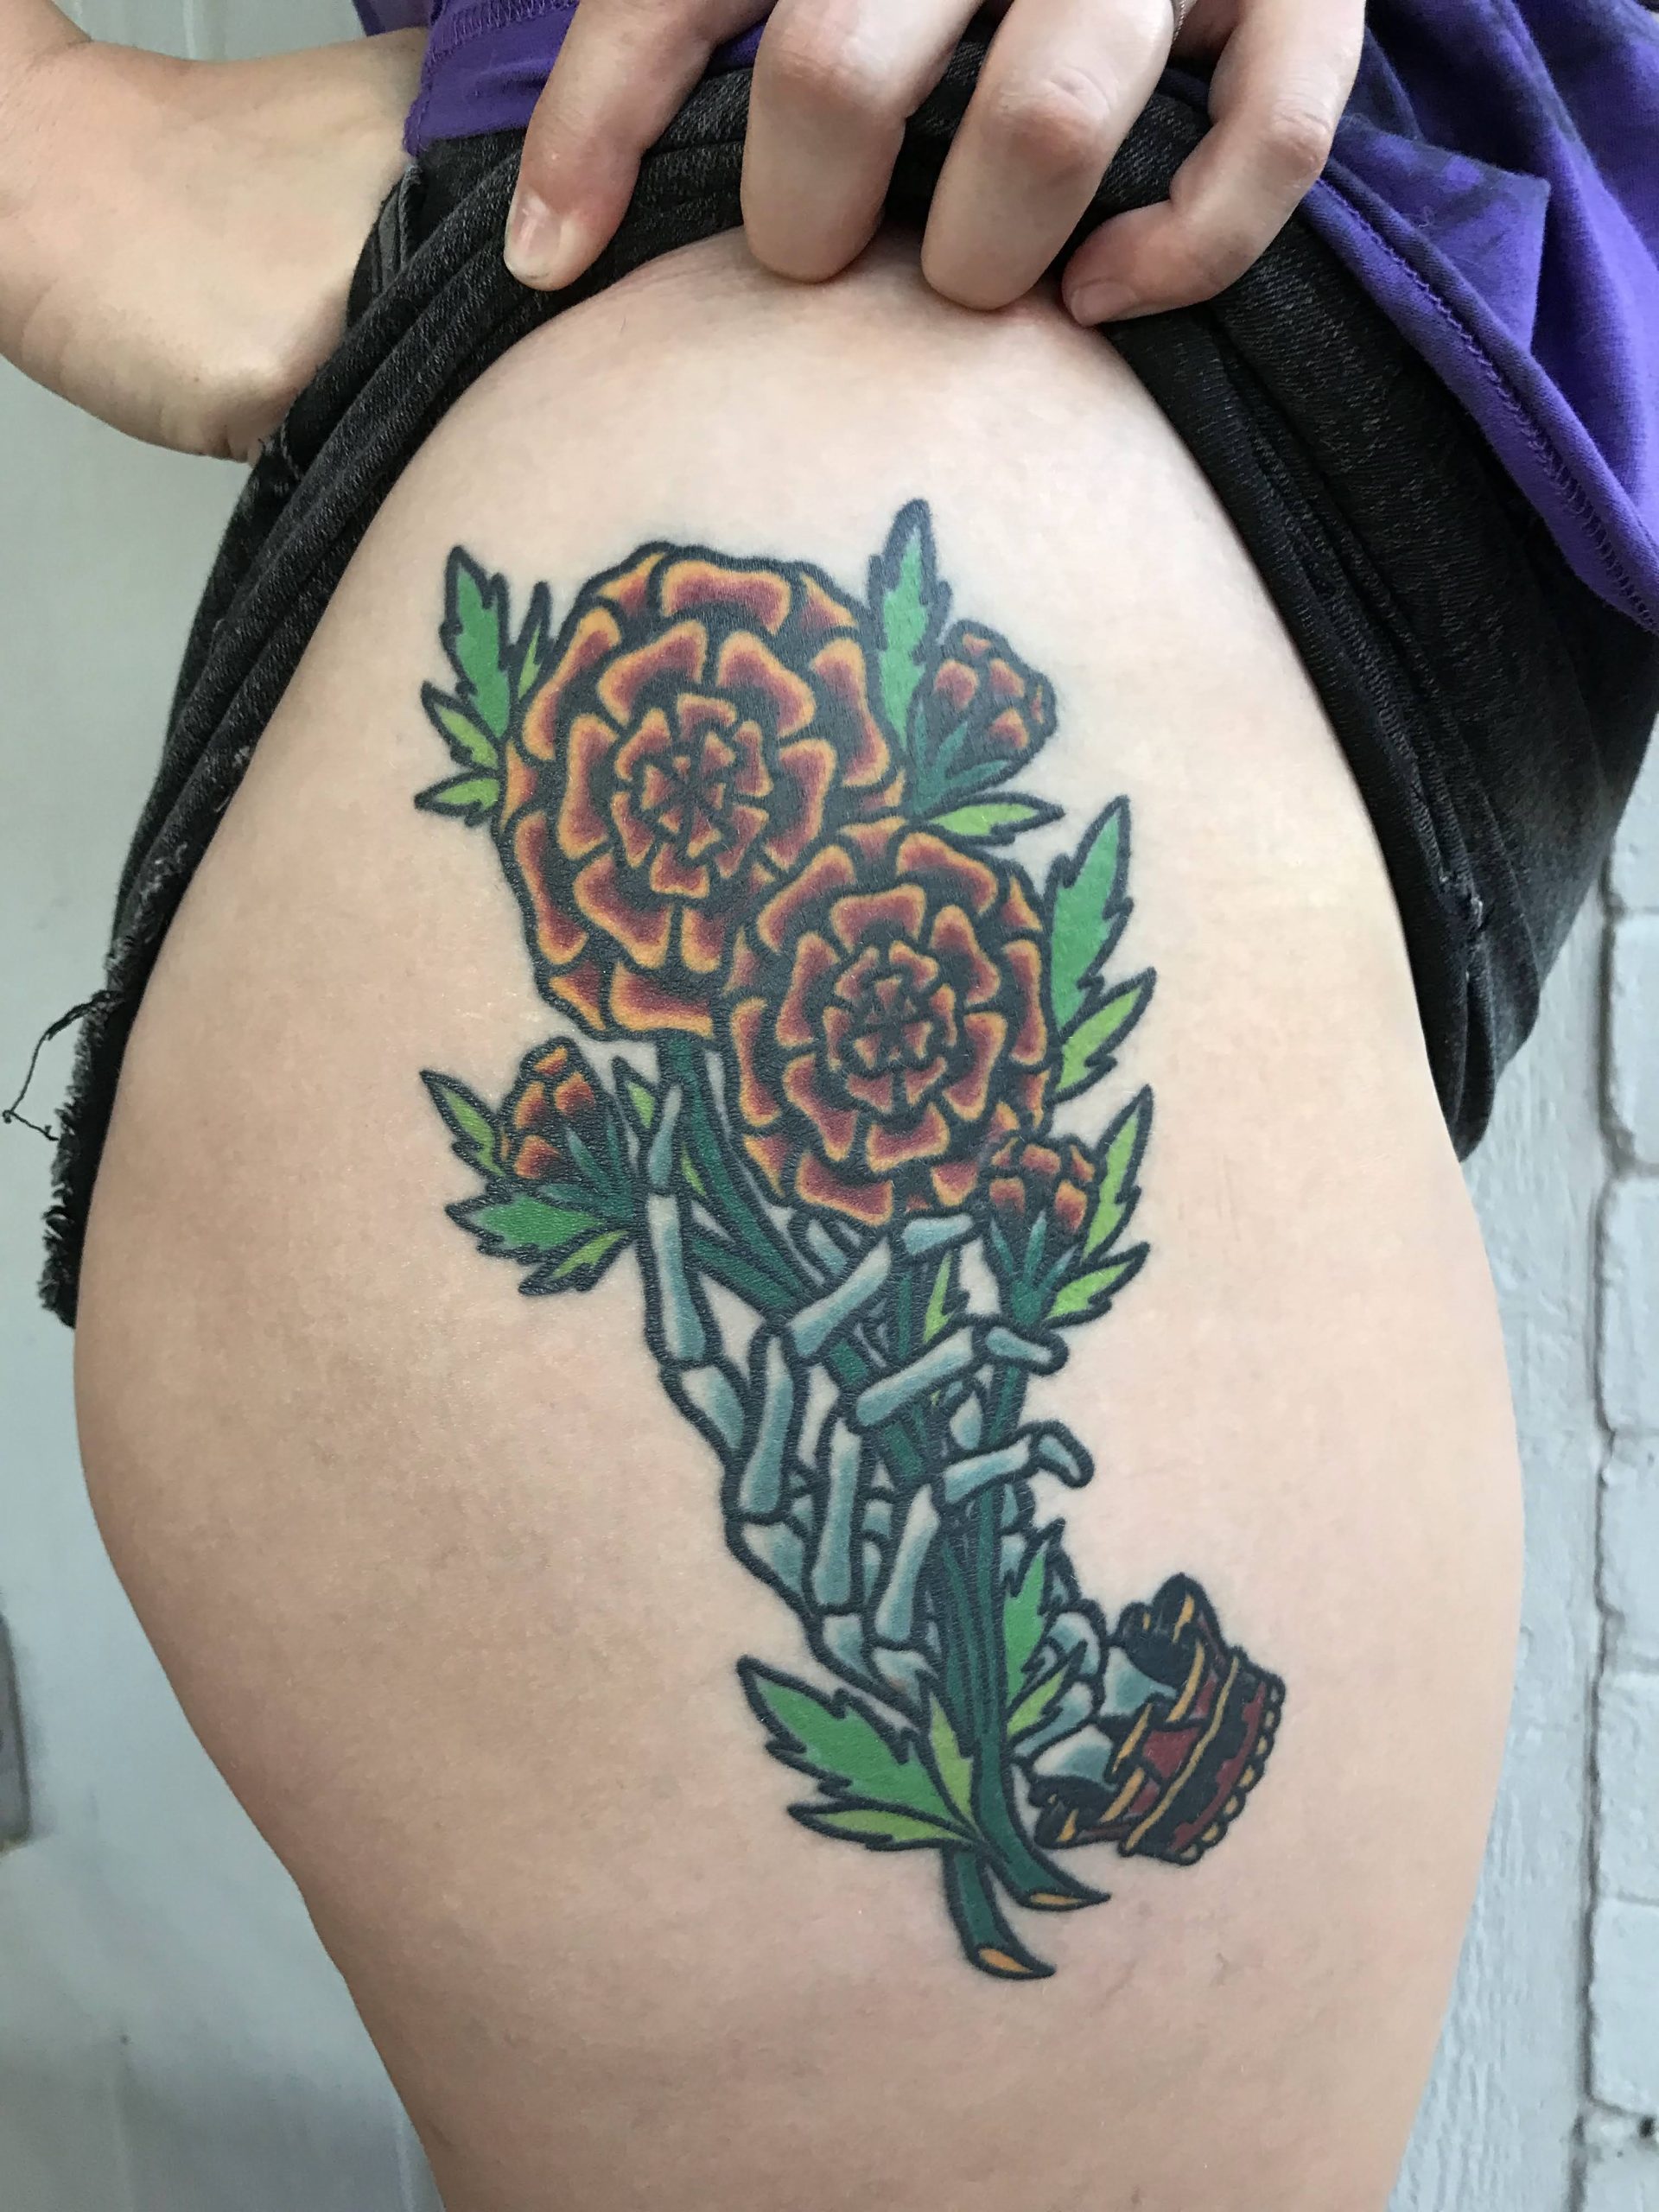 marigolds skeleton hand tattoo by Jake B